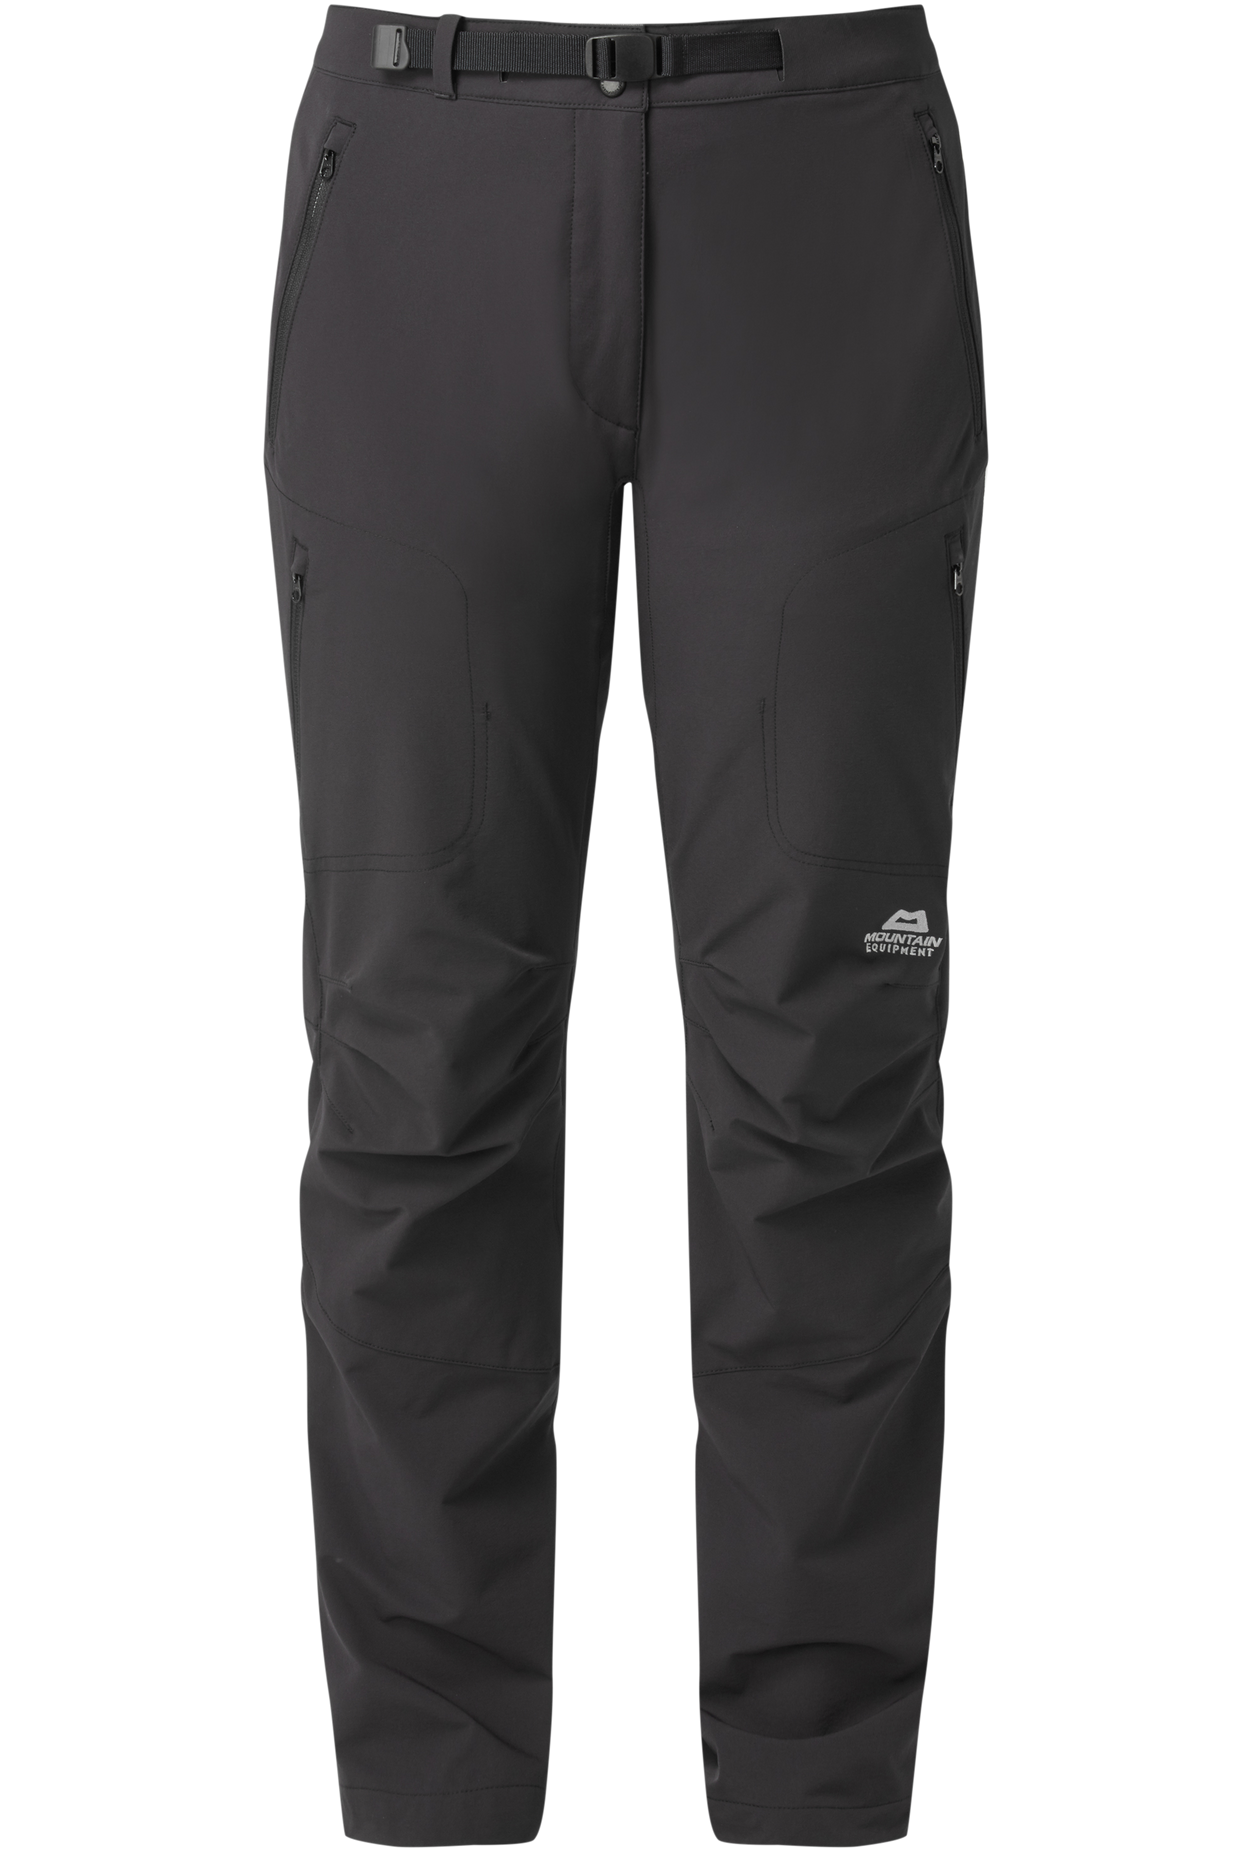 Mountain Equipment dámské softshellové kalhoty Chamois Wmns Pant Barva: black, Velikost: 10/S